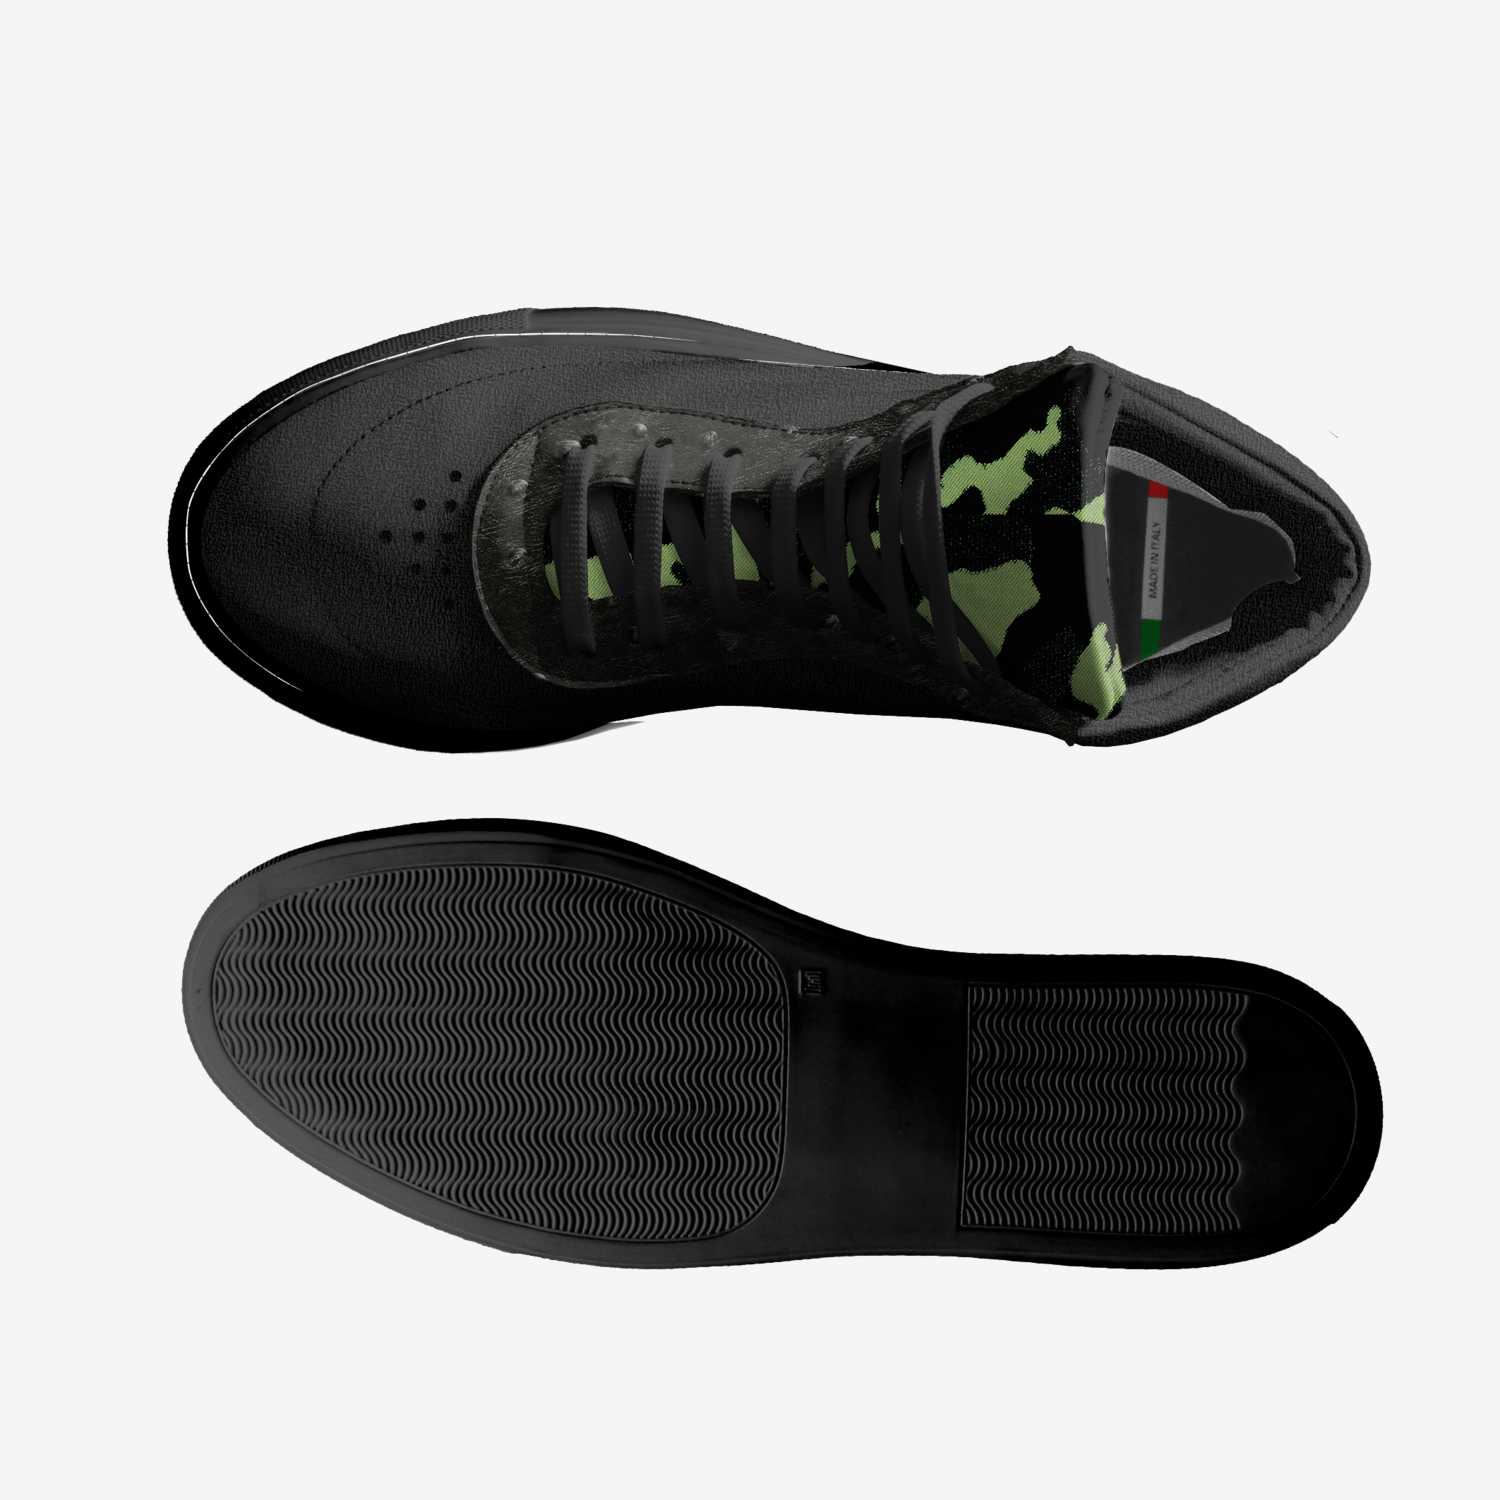 BLACK-LIST 2.0 [UNISEX] - Riddick Shoes Shoe Riddick Shoes   